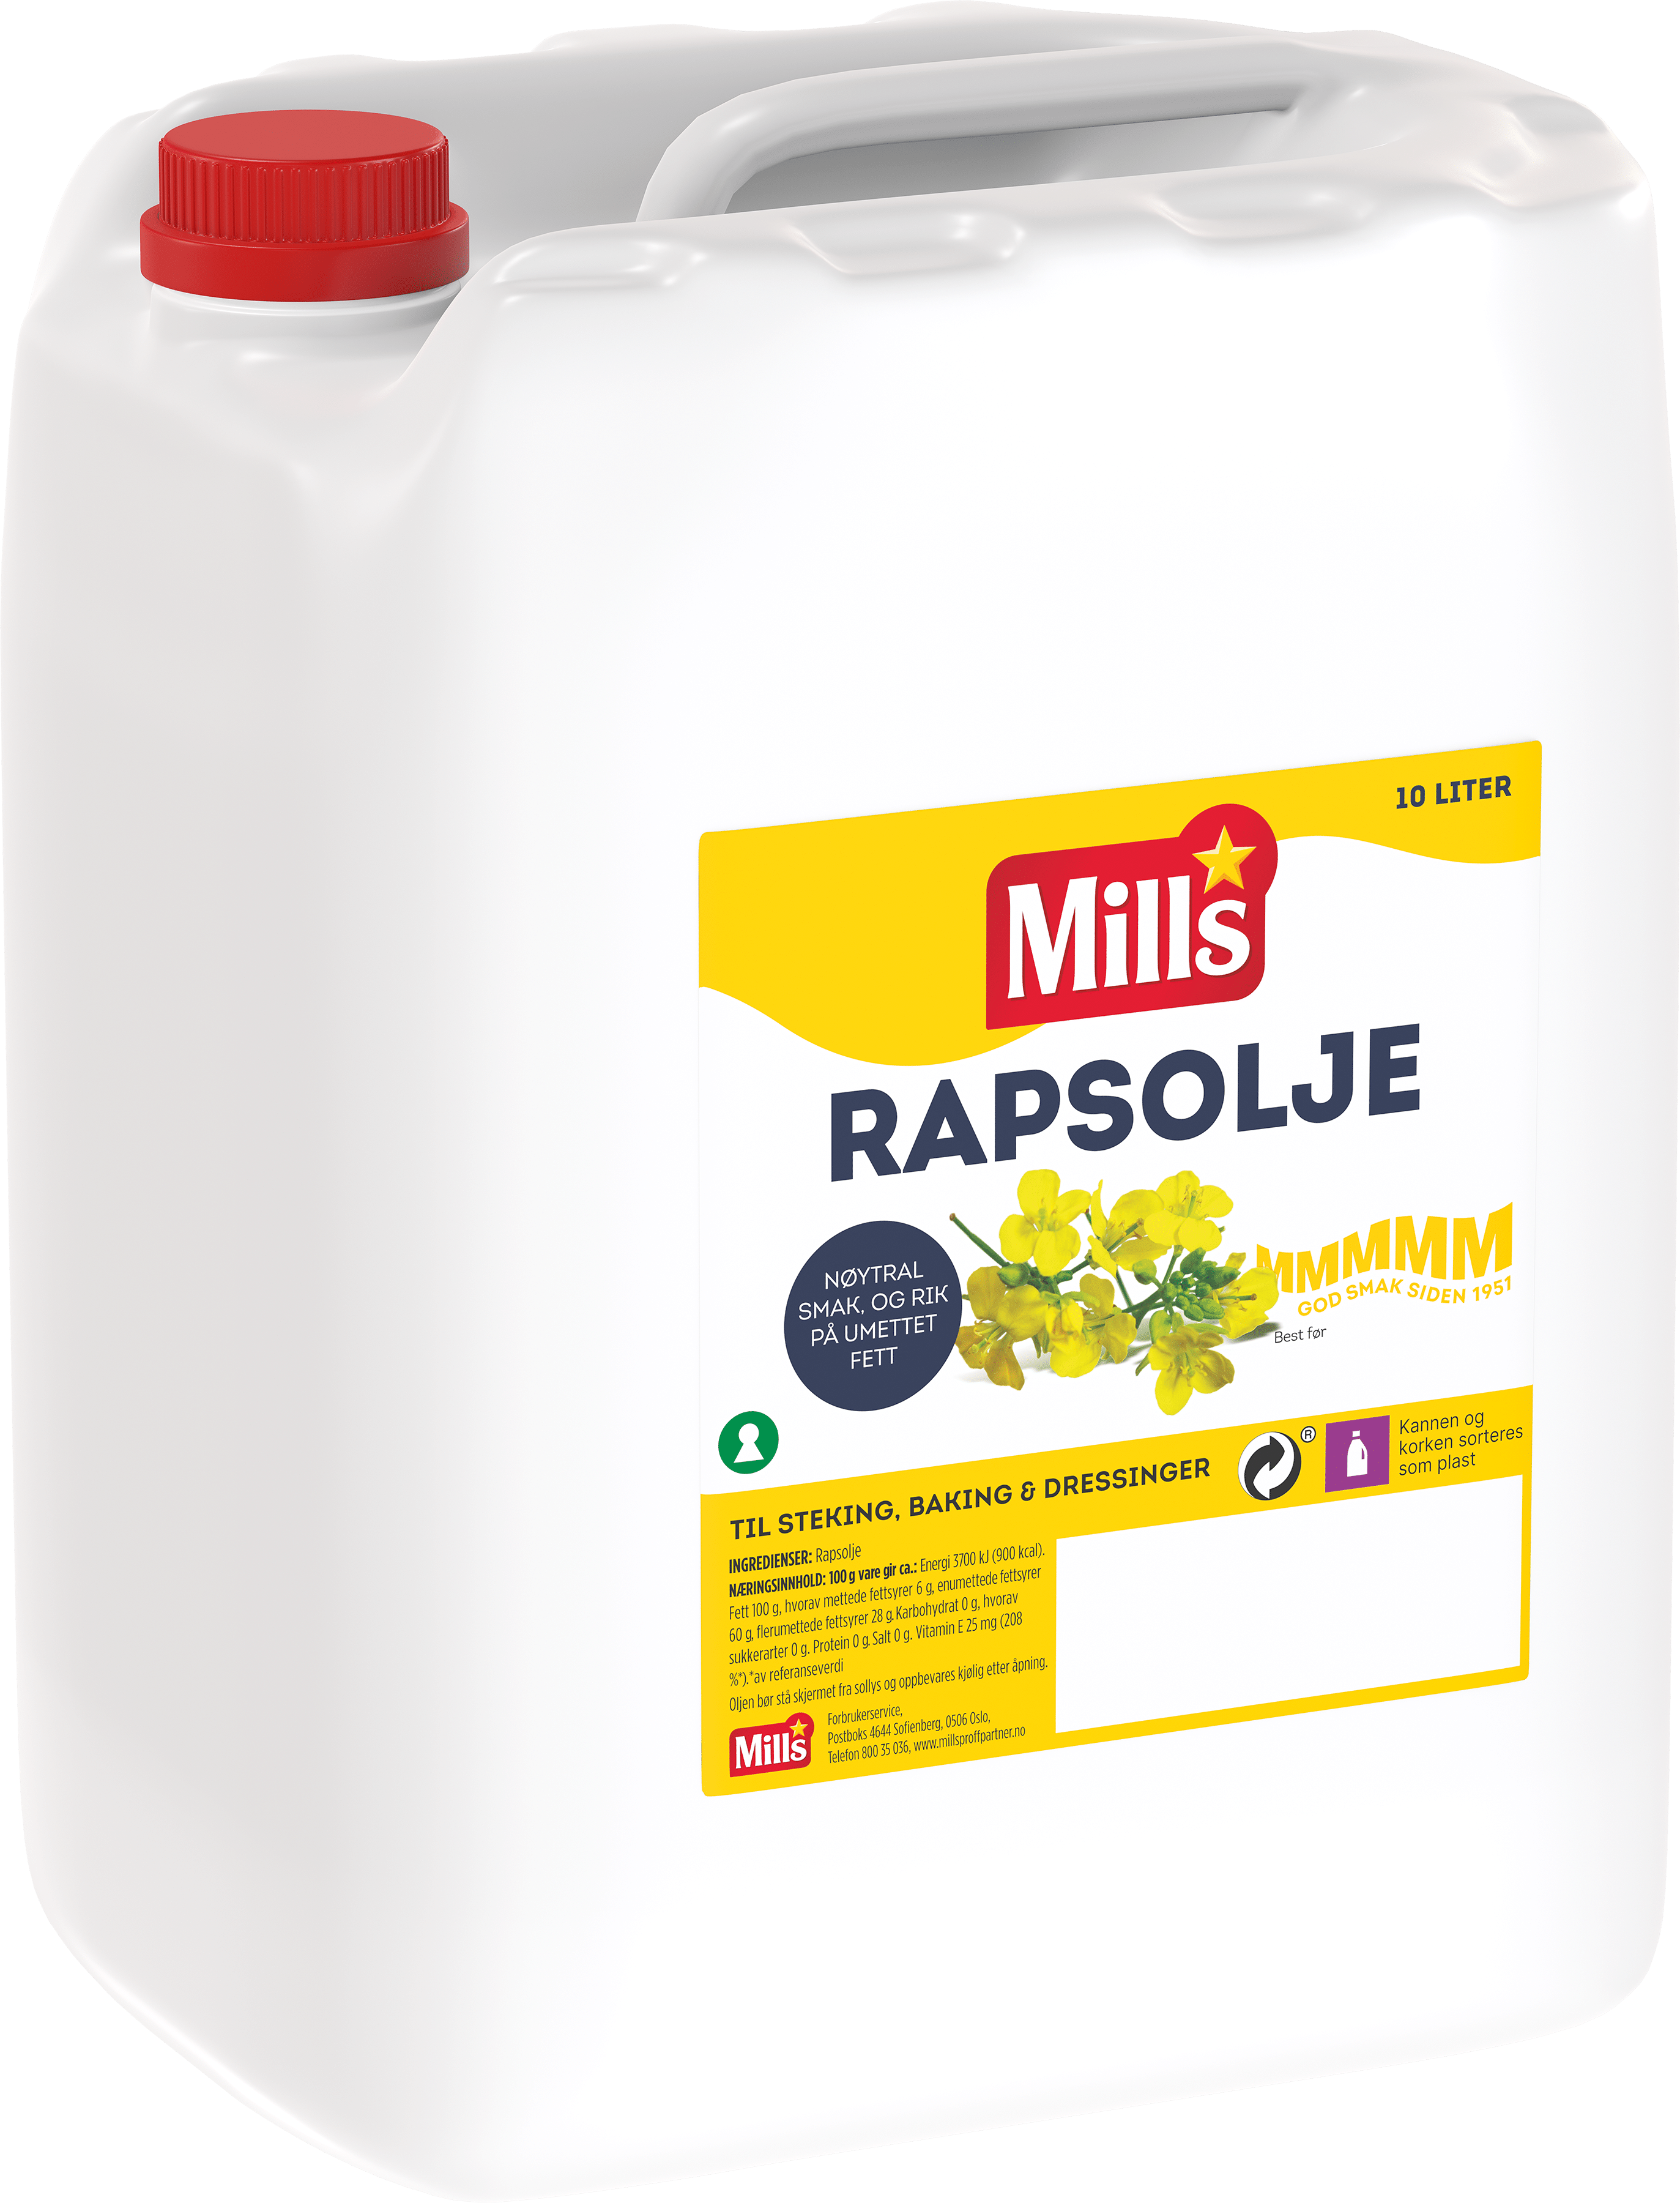 Mills Rapsolje 10 liter kanne